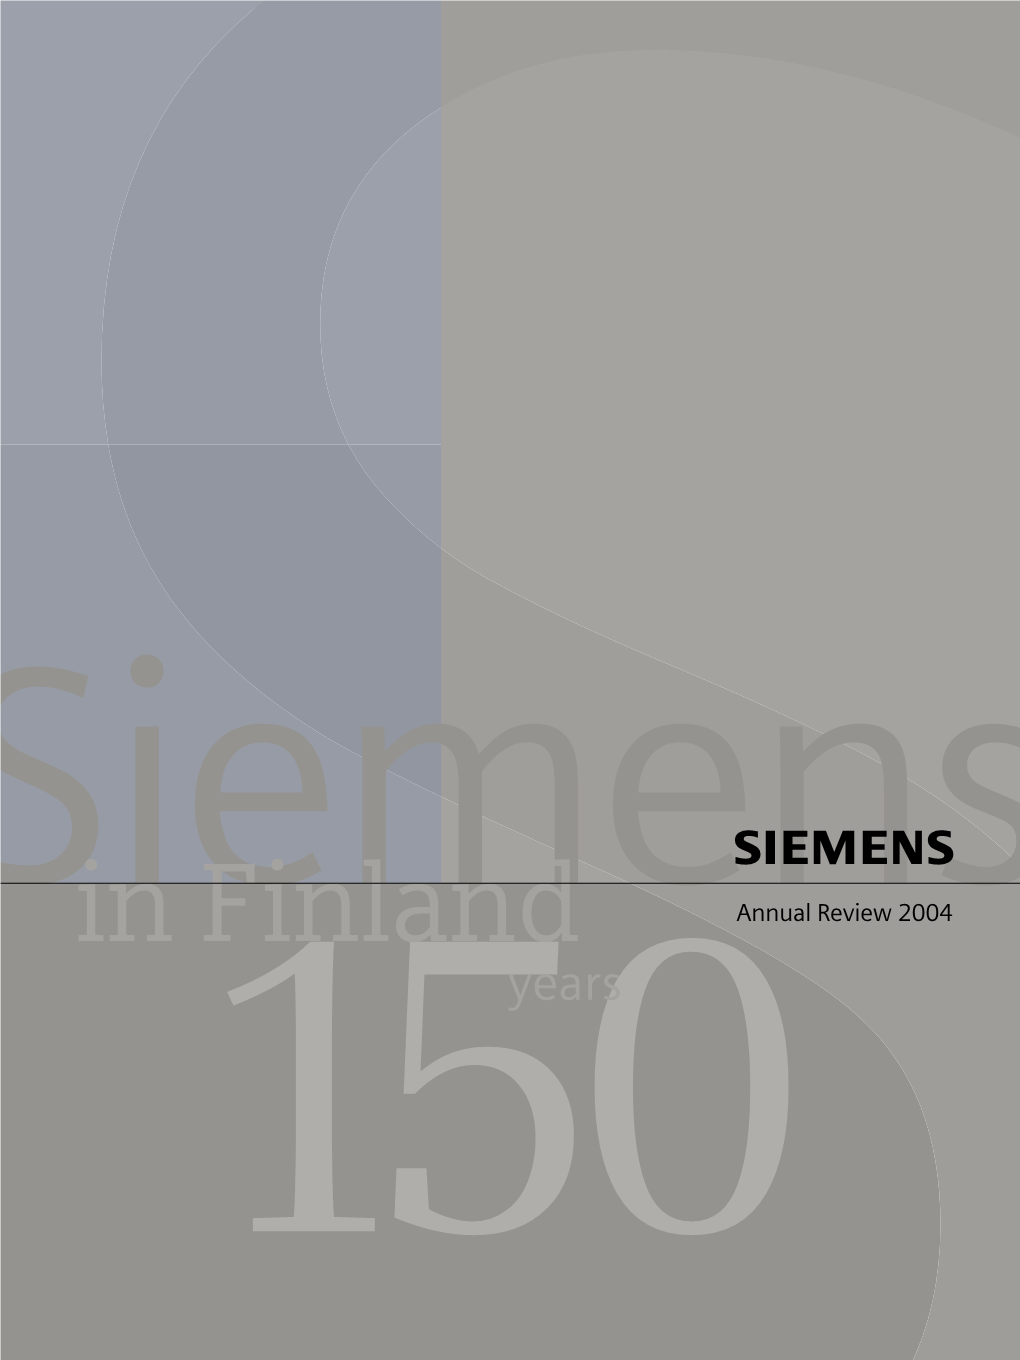 Siemens Annual Report 2004